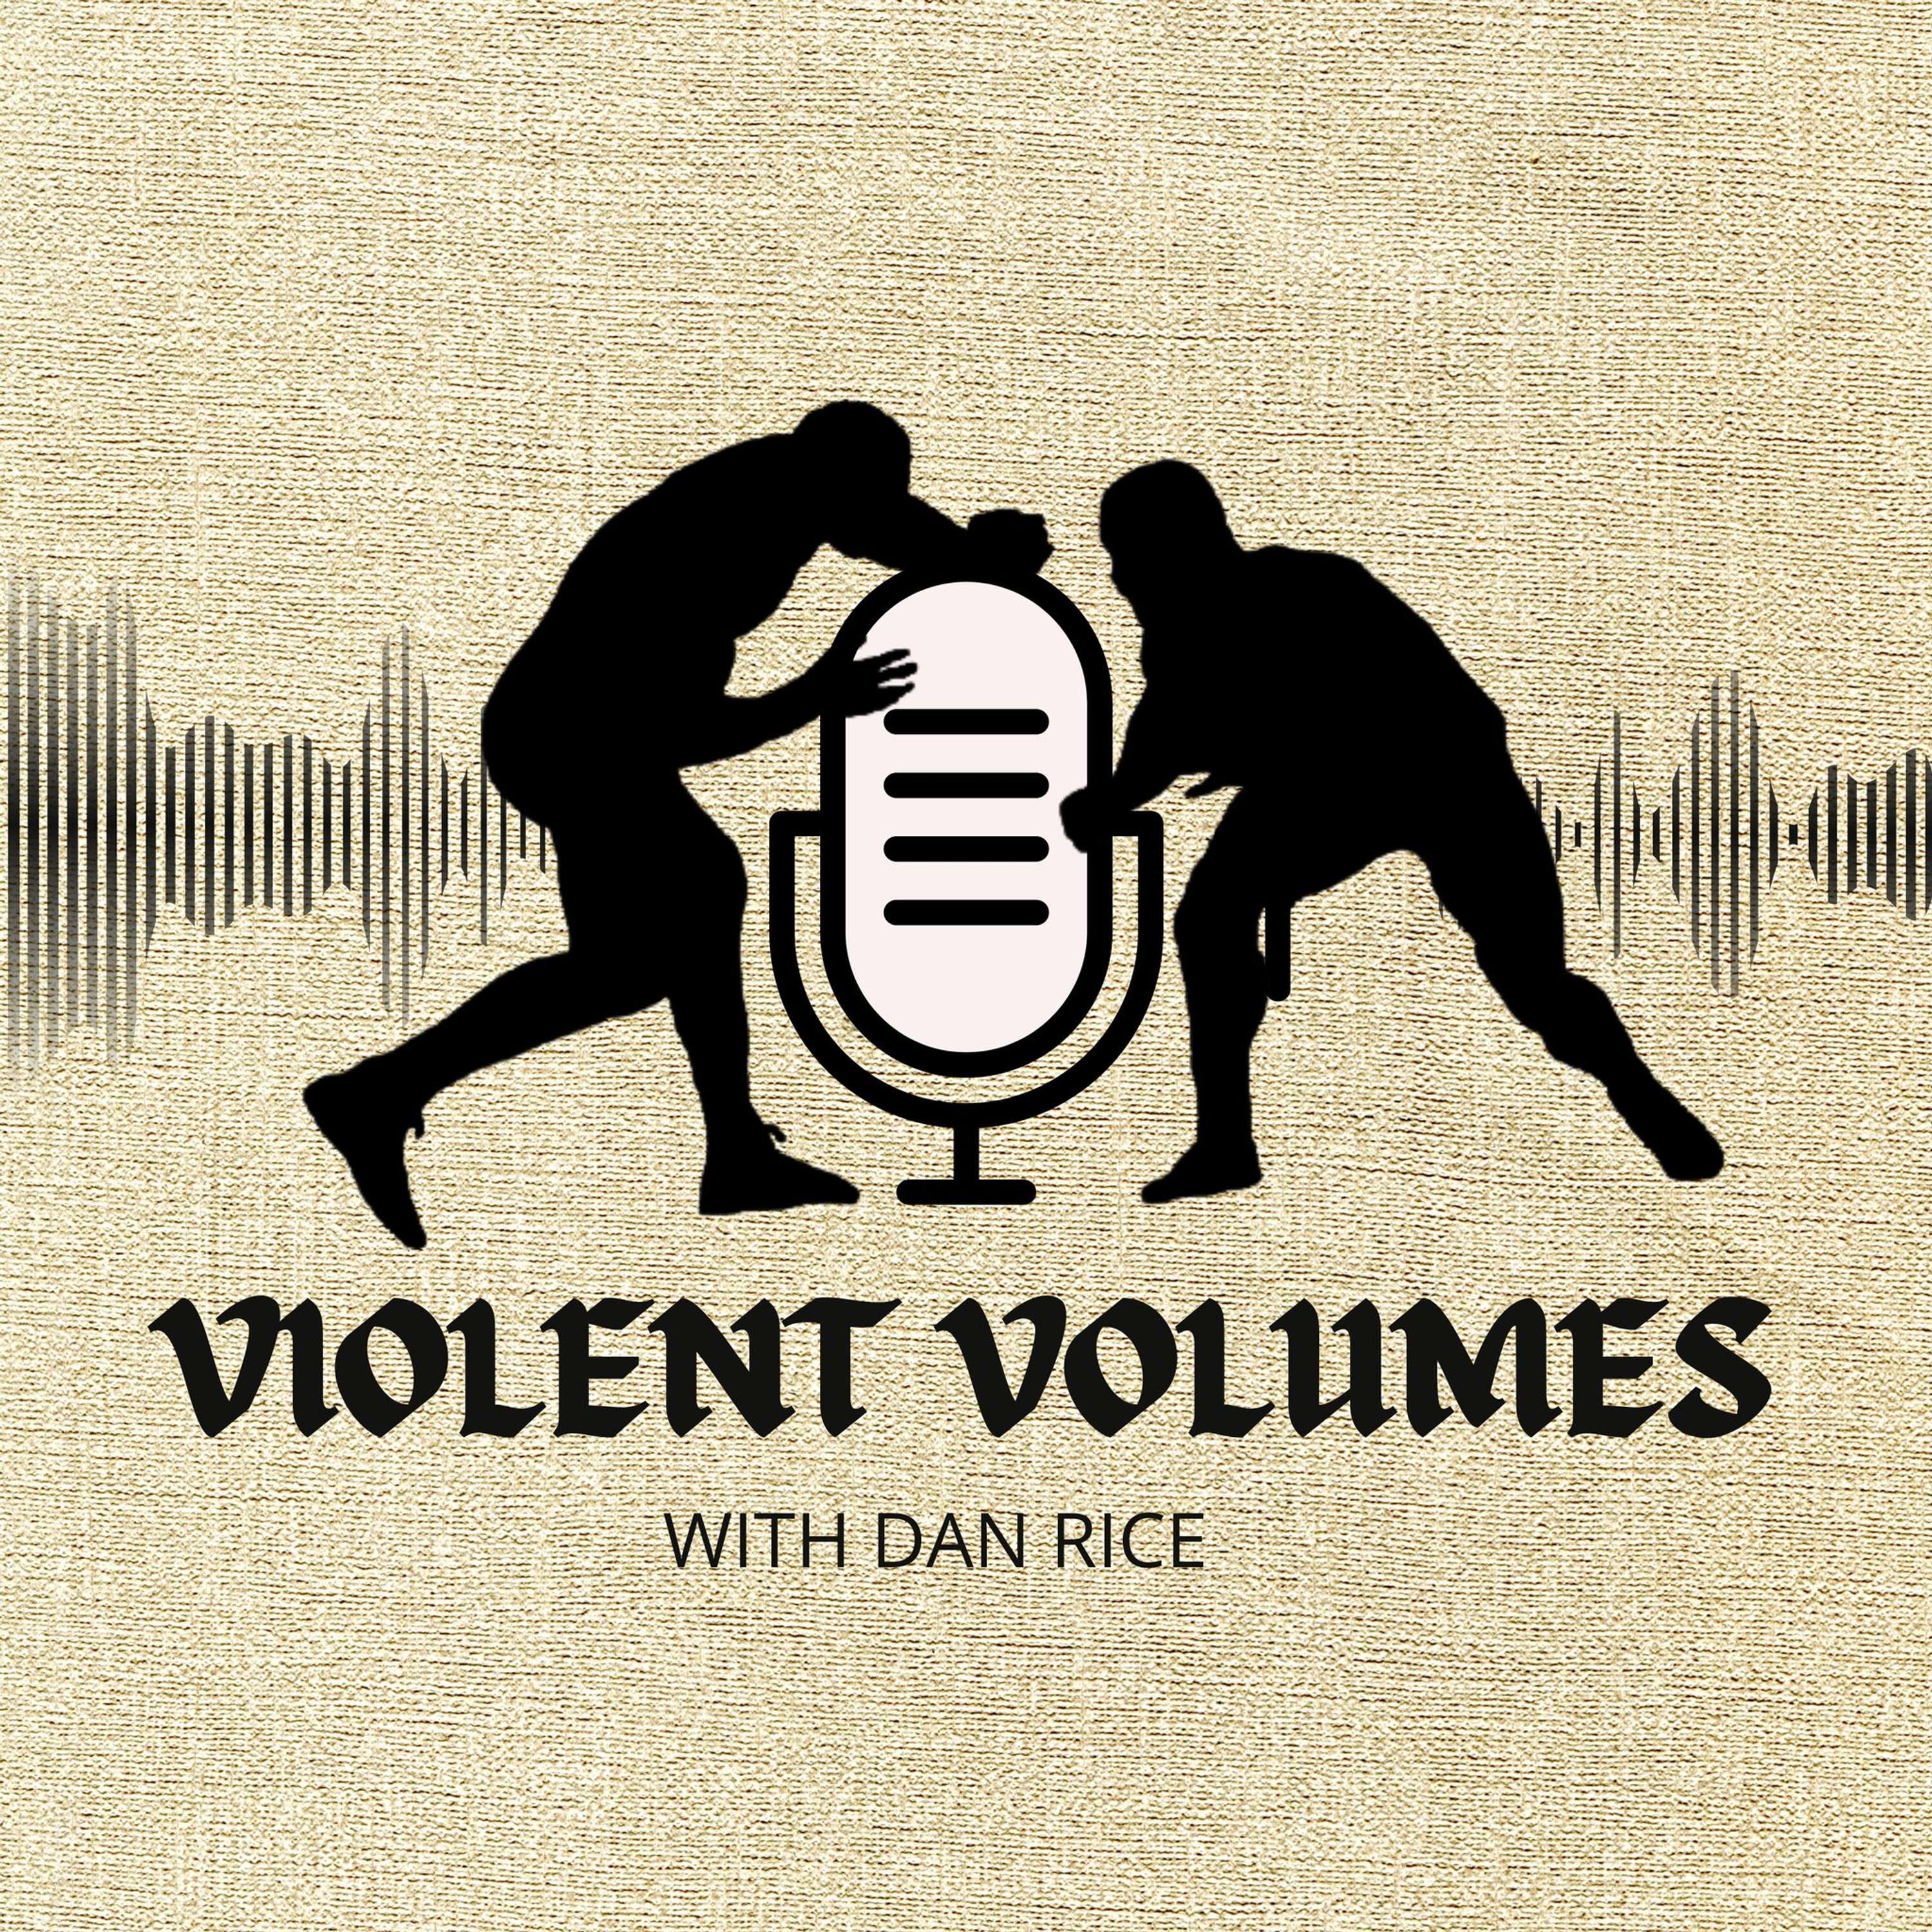 Violent Volumes